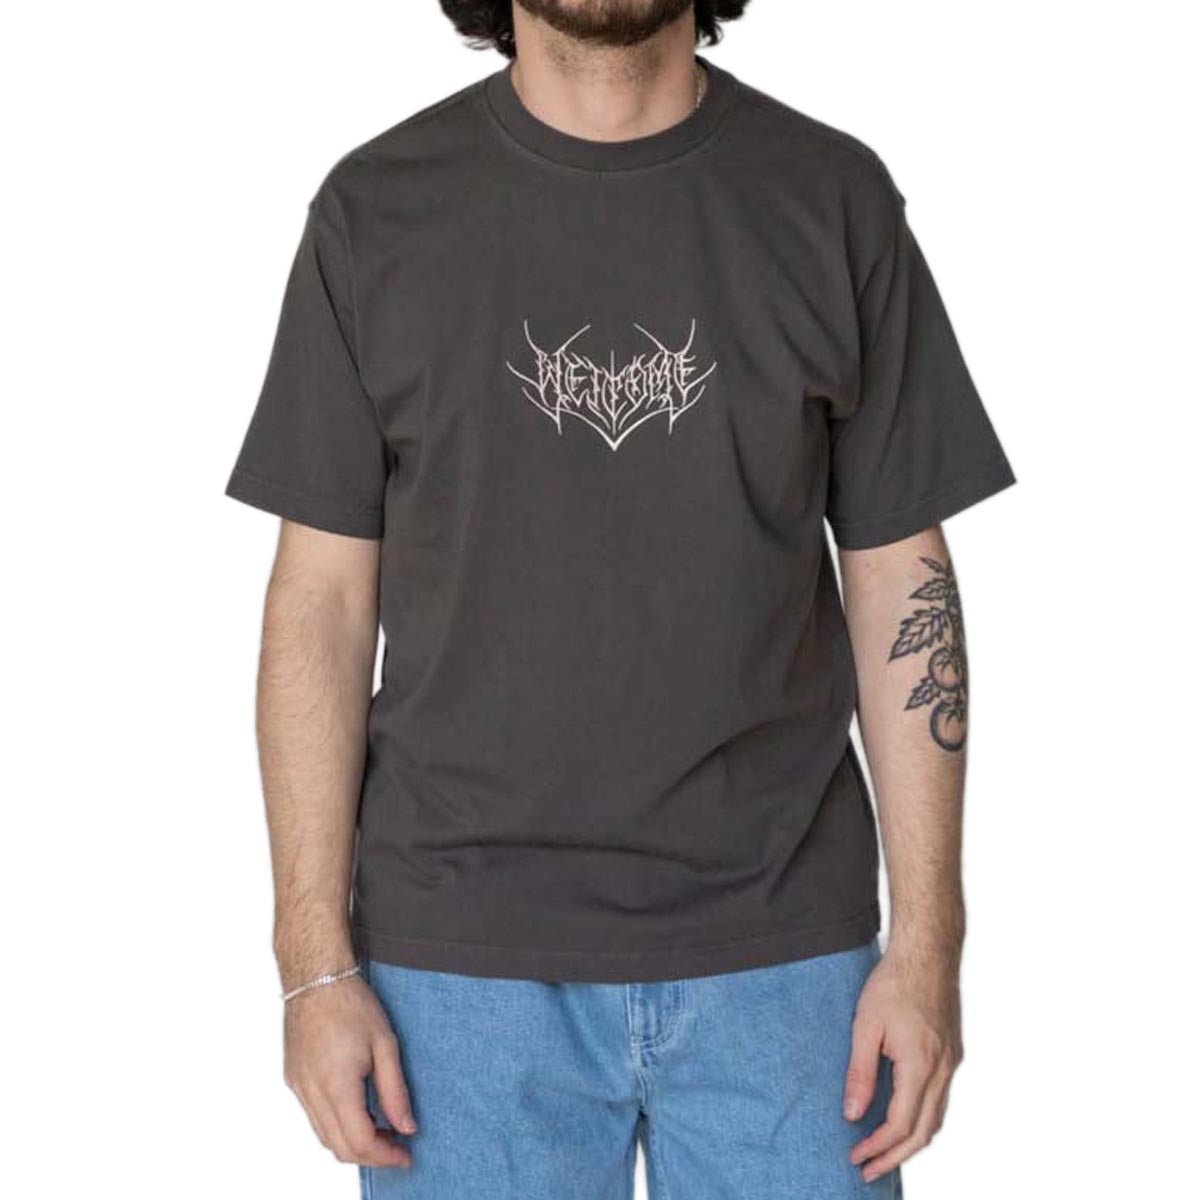 Welcome Splinter T-Shirt - Raven image 1